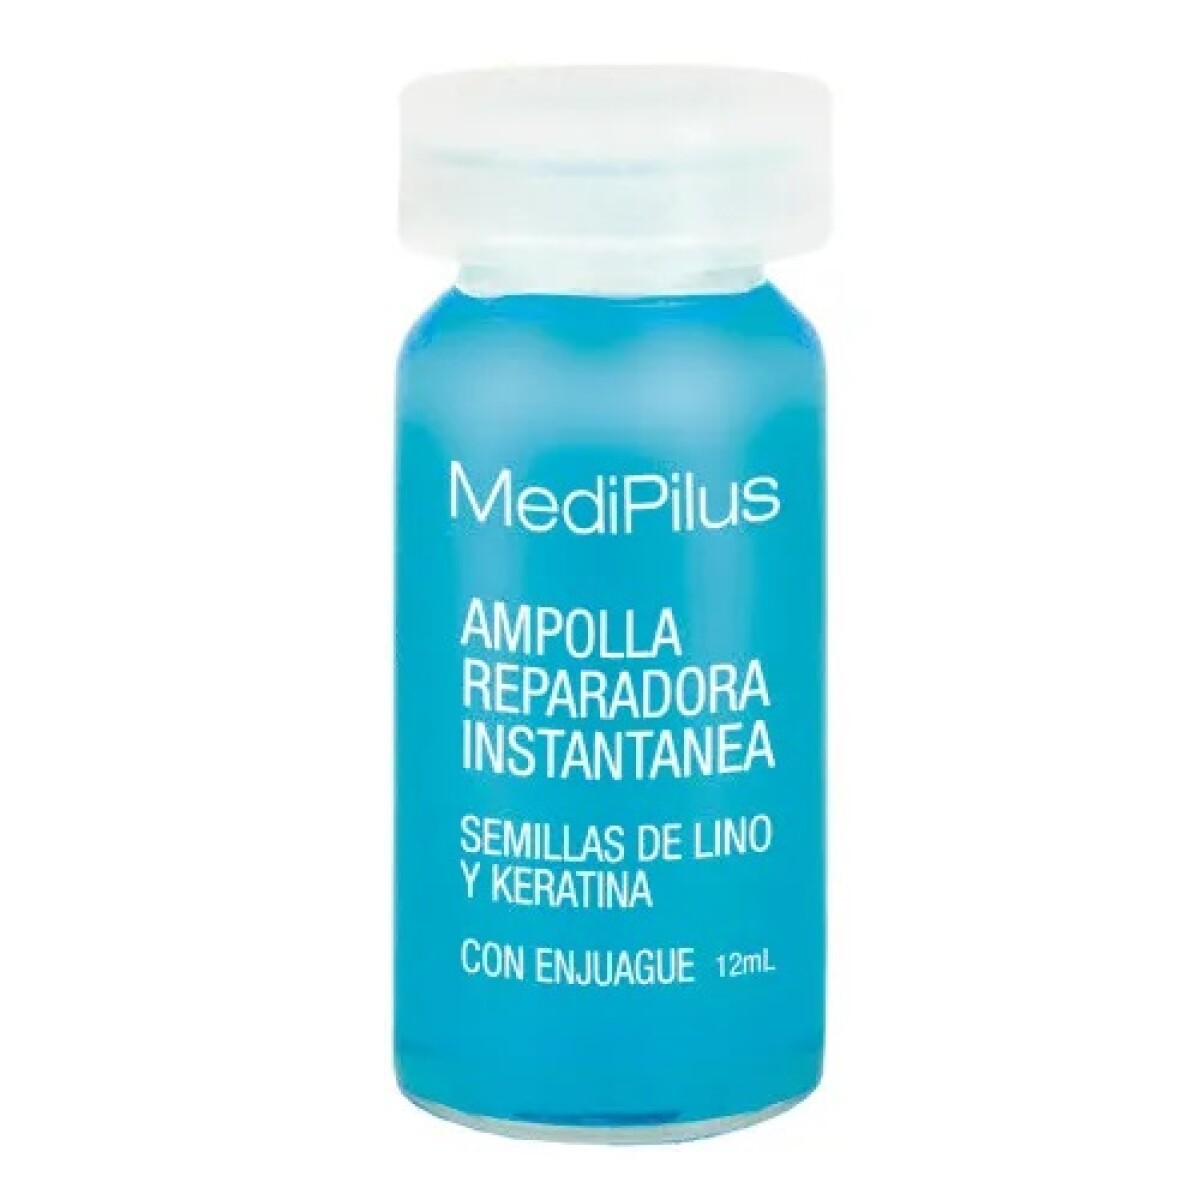 Medipilus Ampolla Reparadora Instantánea 12 Ml. 